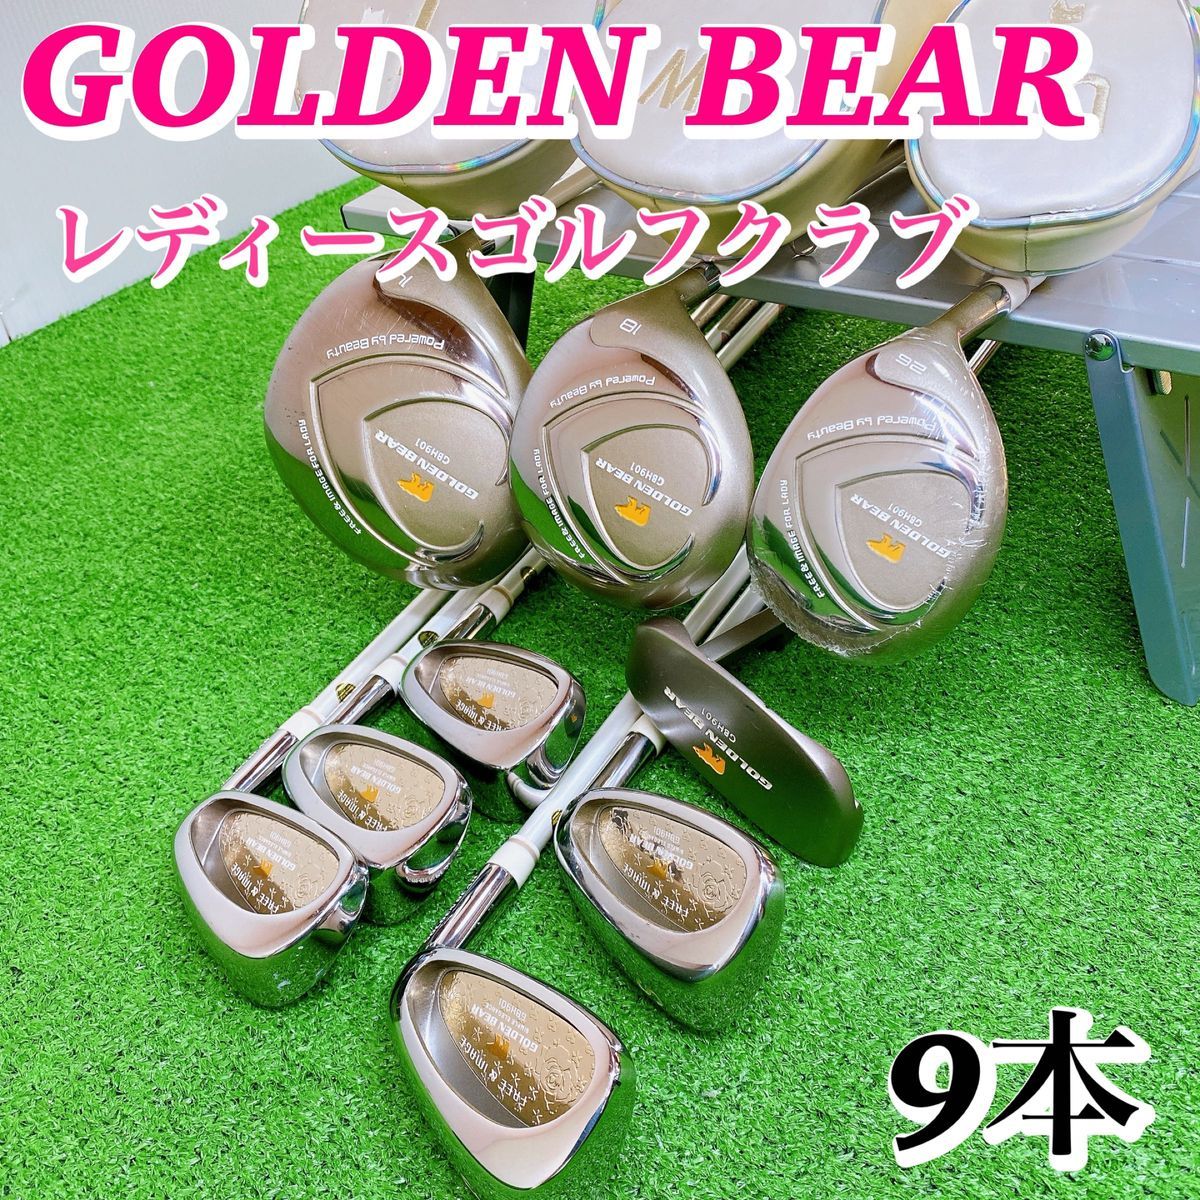 Golden Bear ゴルフクラブ フルセット - ゴルフ